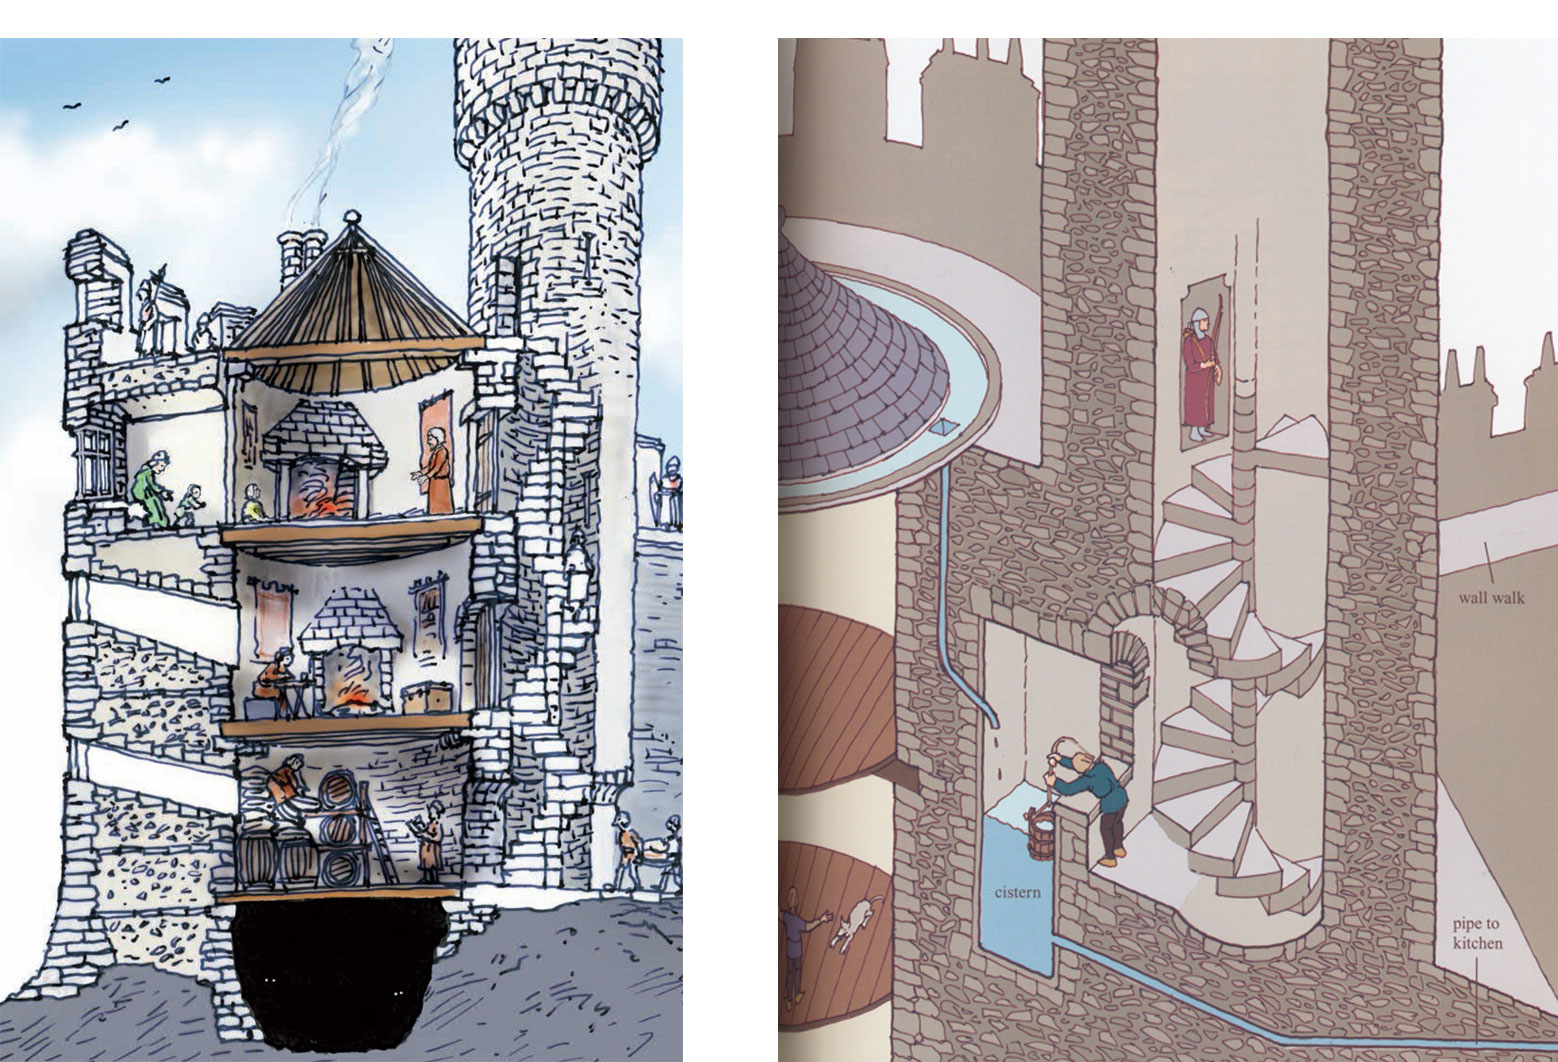 Cutaway illustrations of ancient castles by David Macaulay